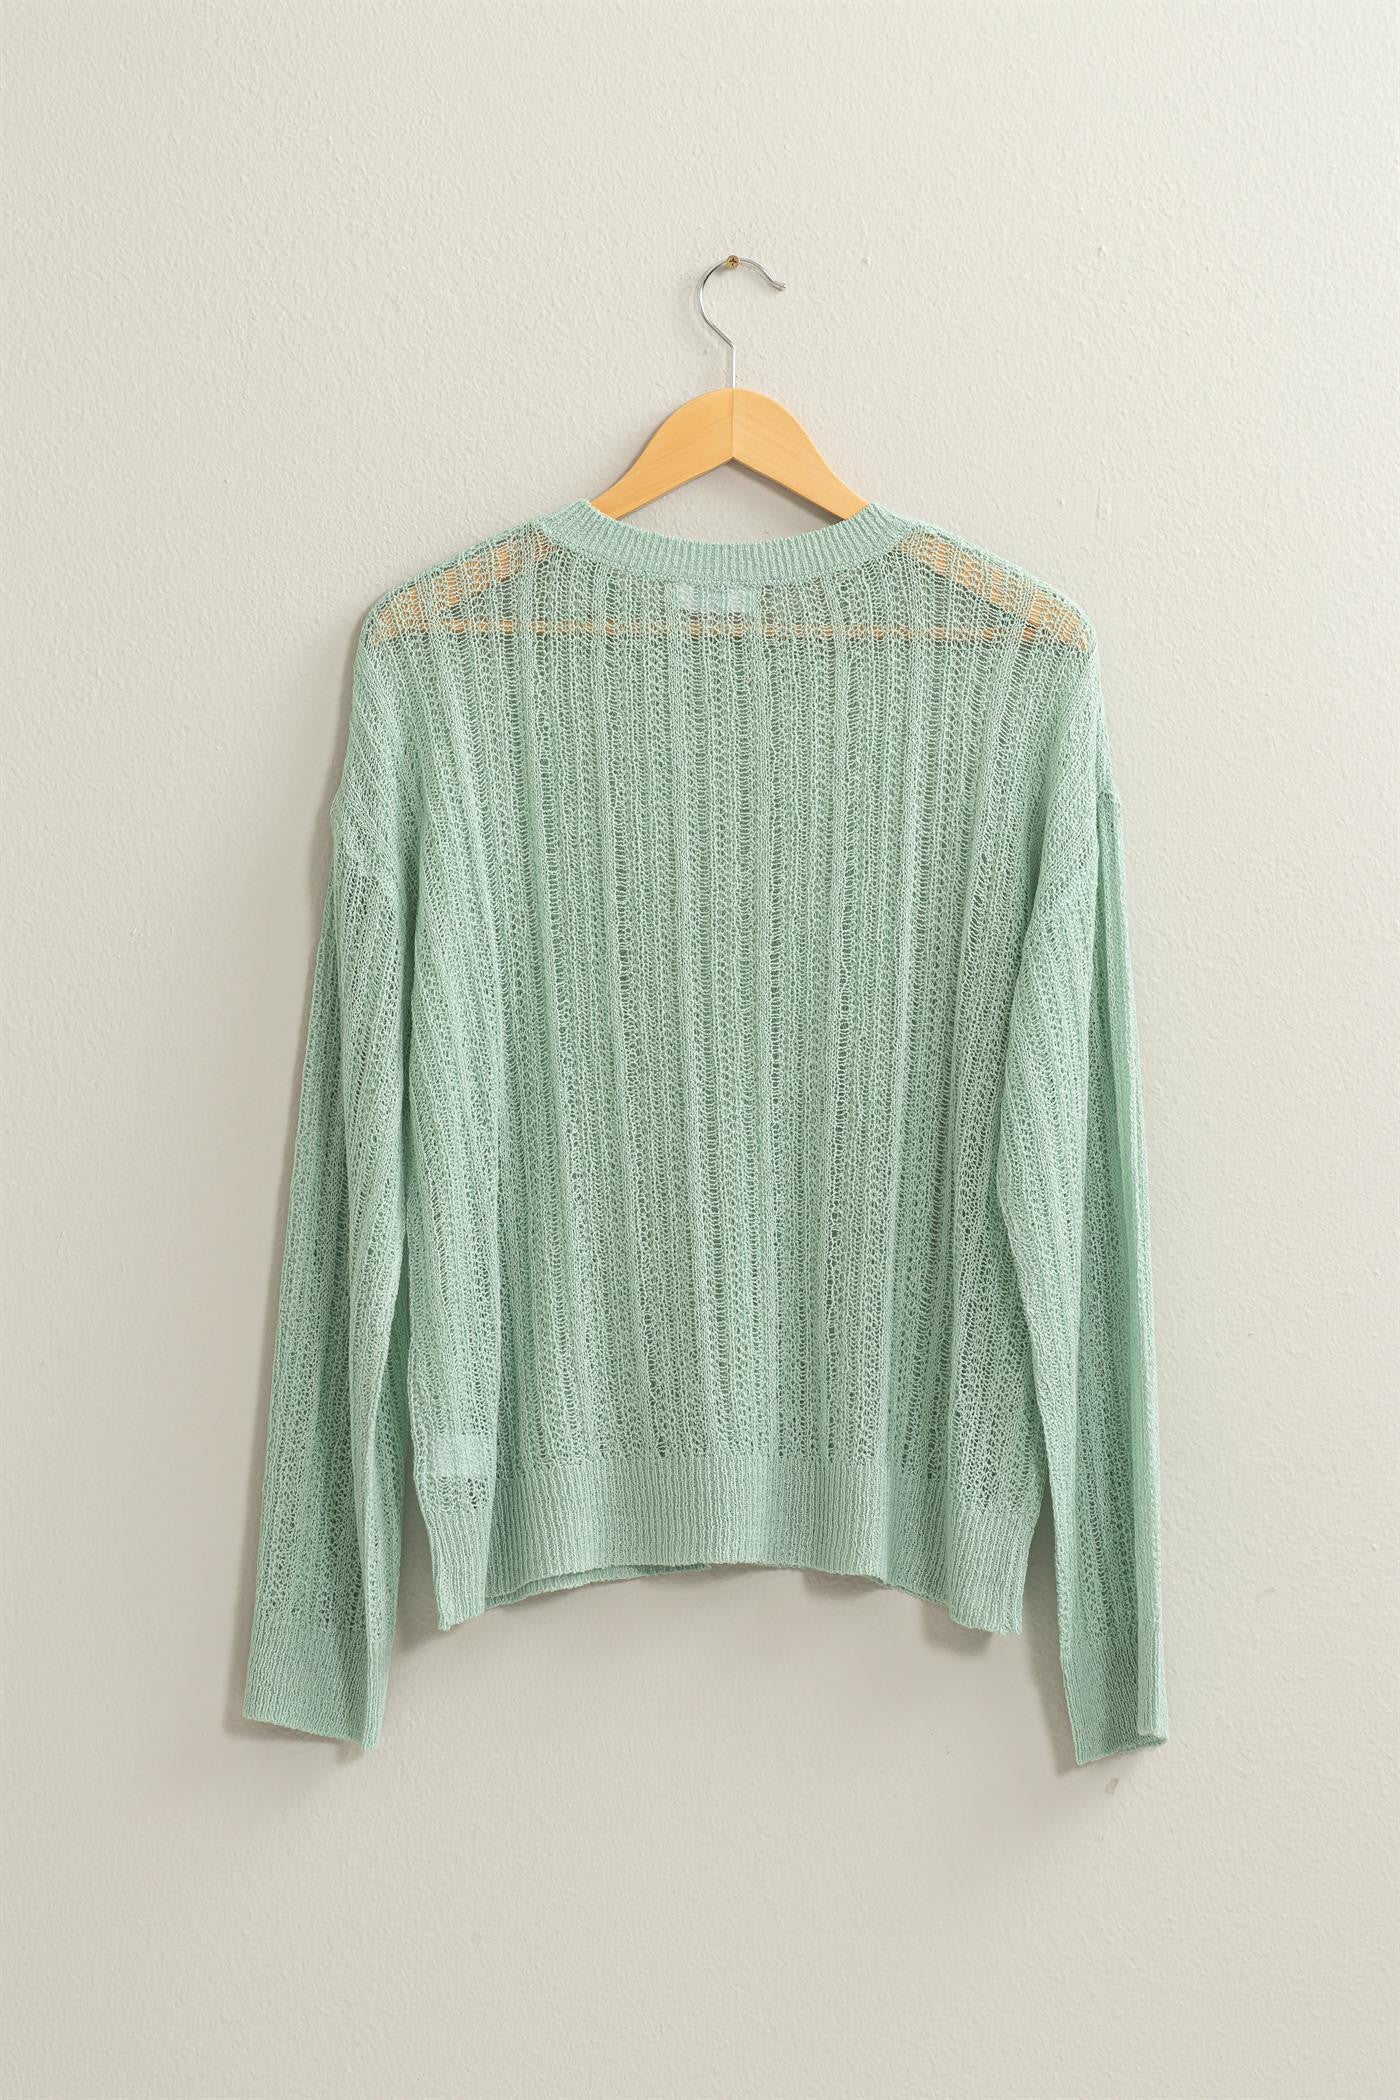 Alix Drop Shoulder Sweater in Mint